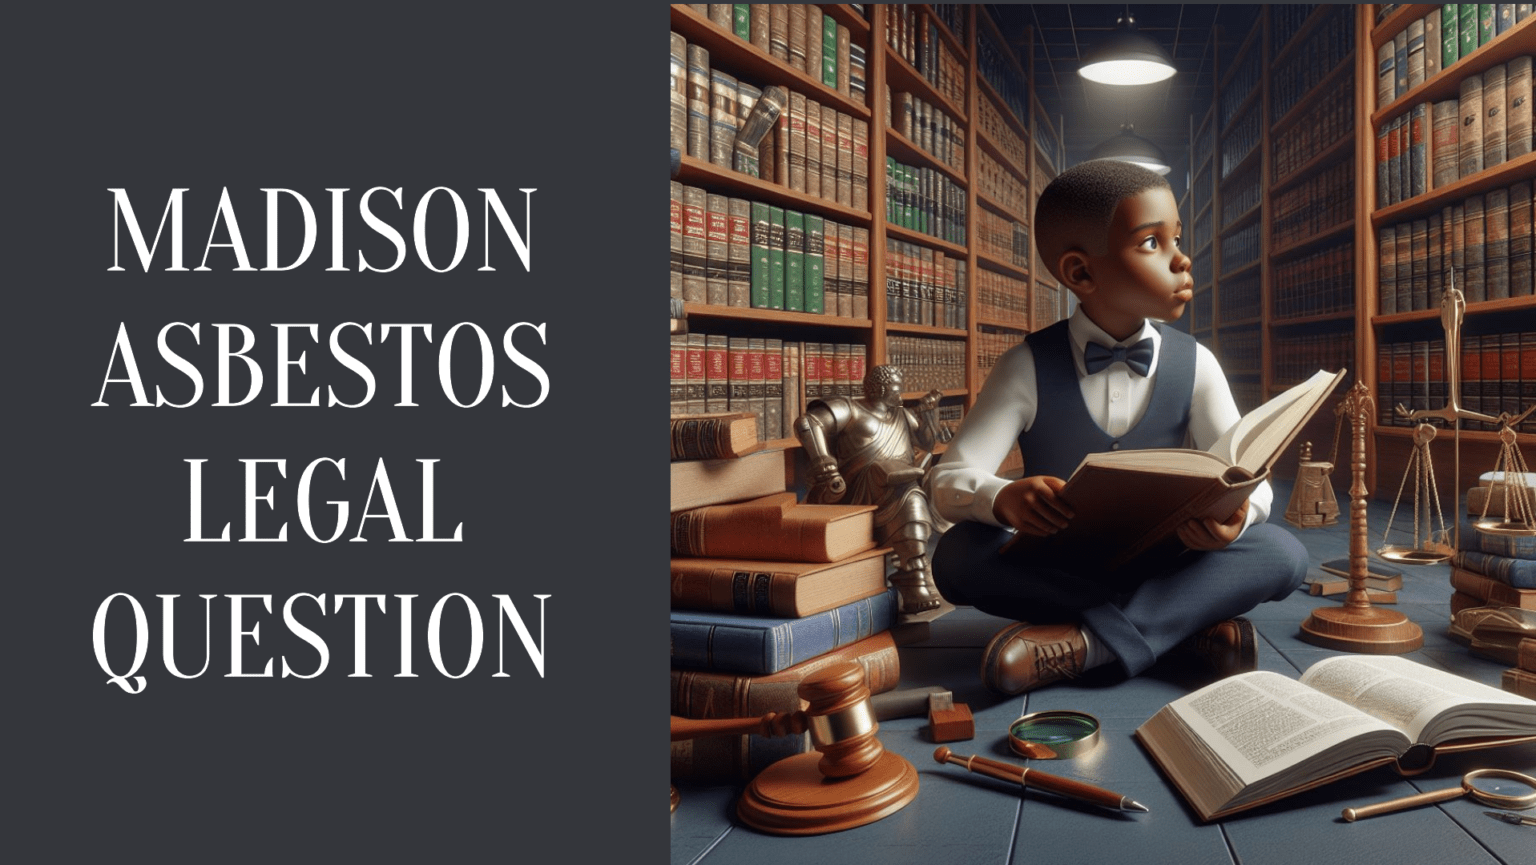 Madison Asbestos Legal Question